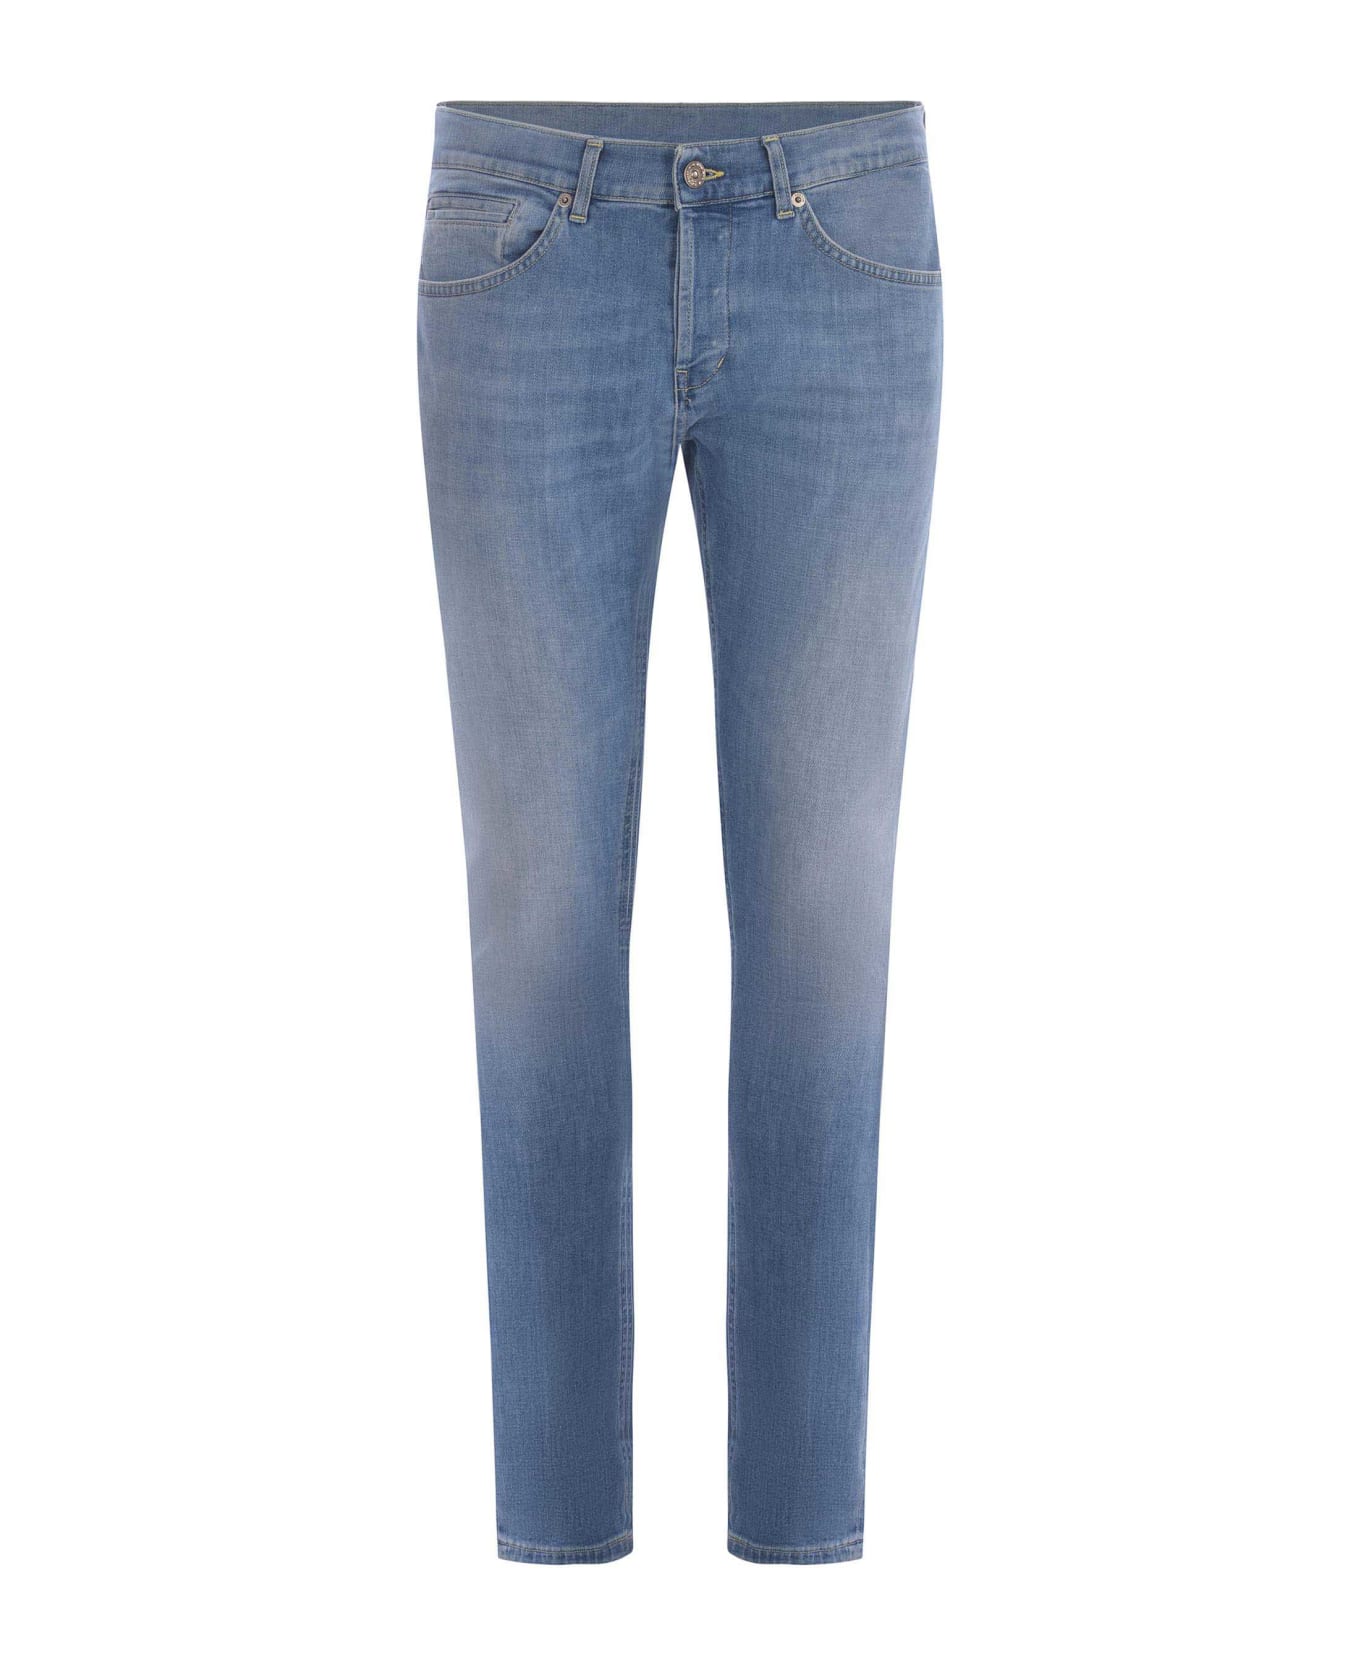 Dondup Jeans Dondup "george" Made Of Stretch Denim - Denim azzurro chiaro